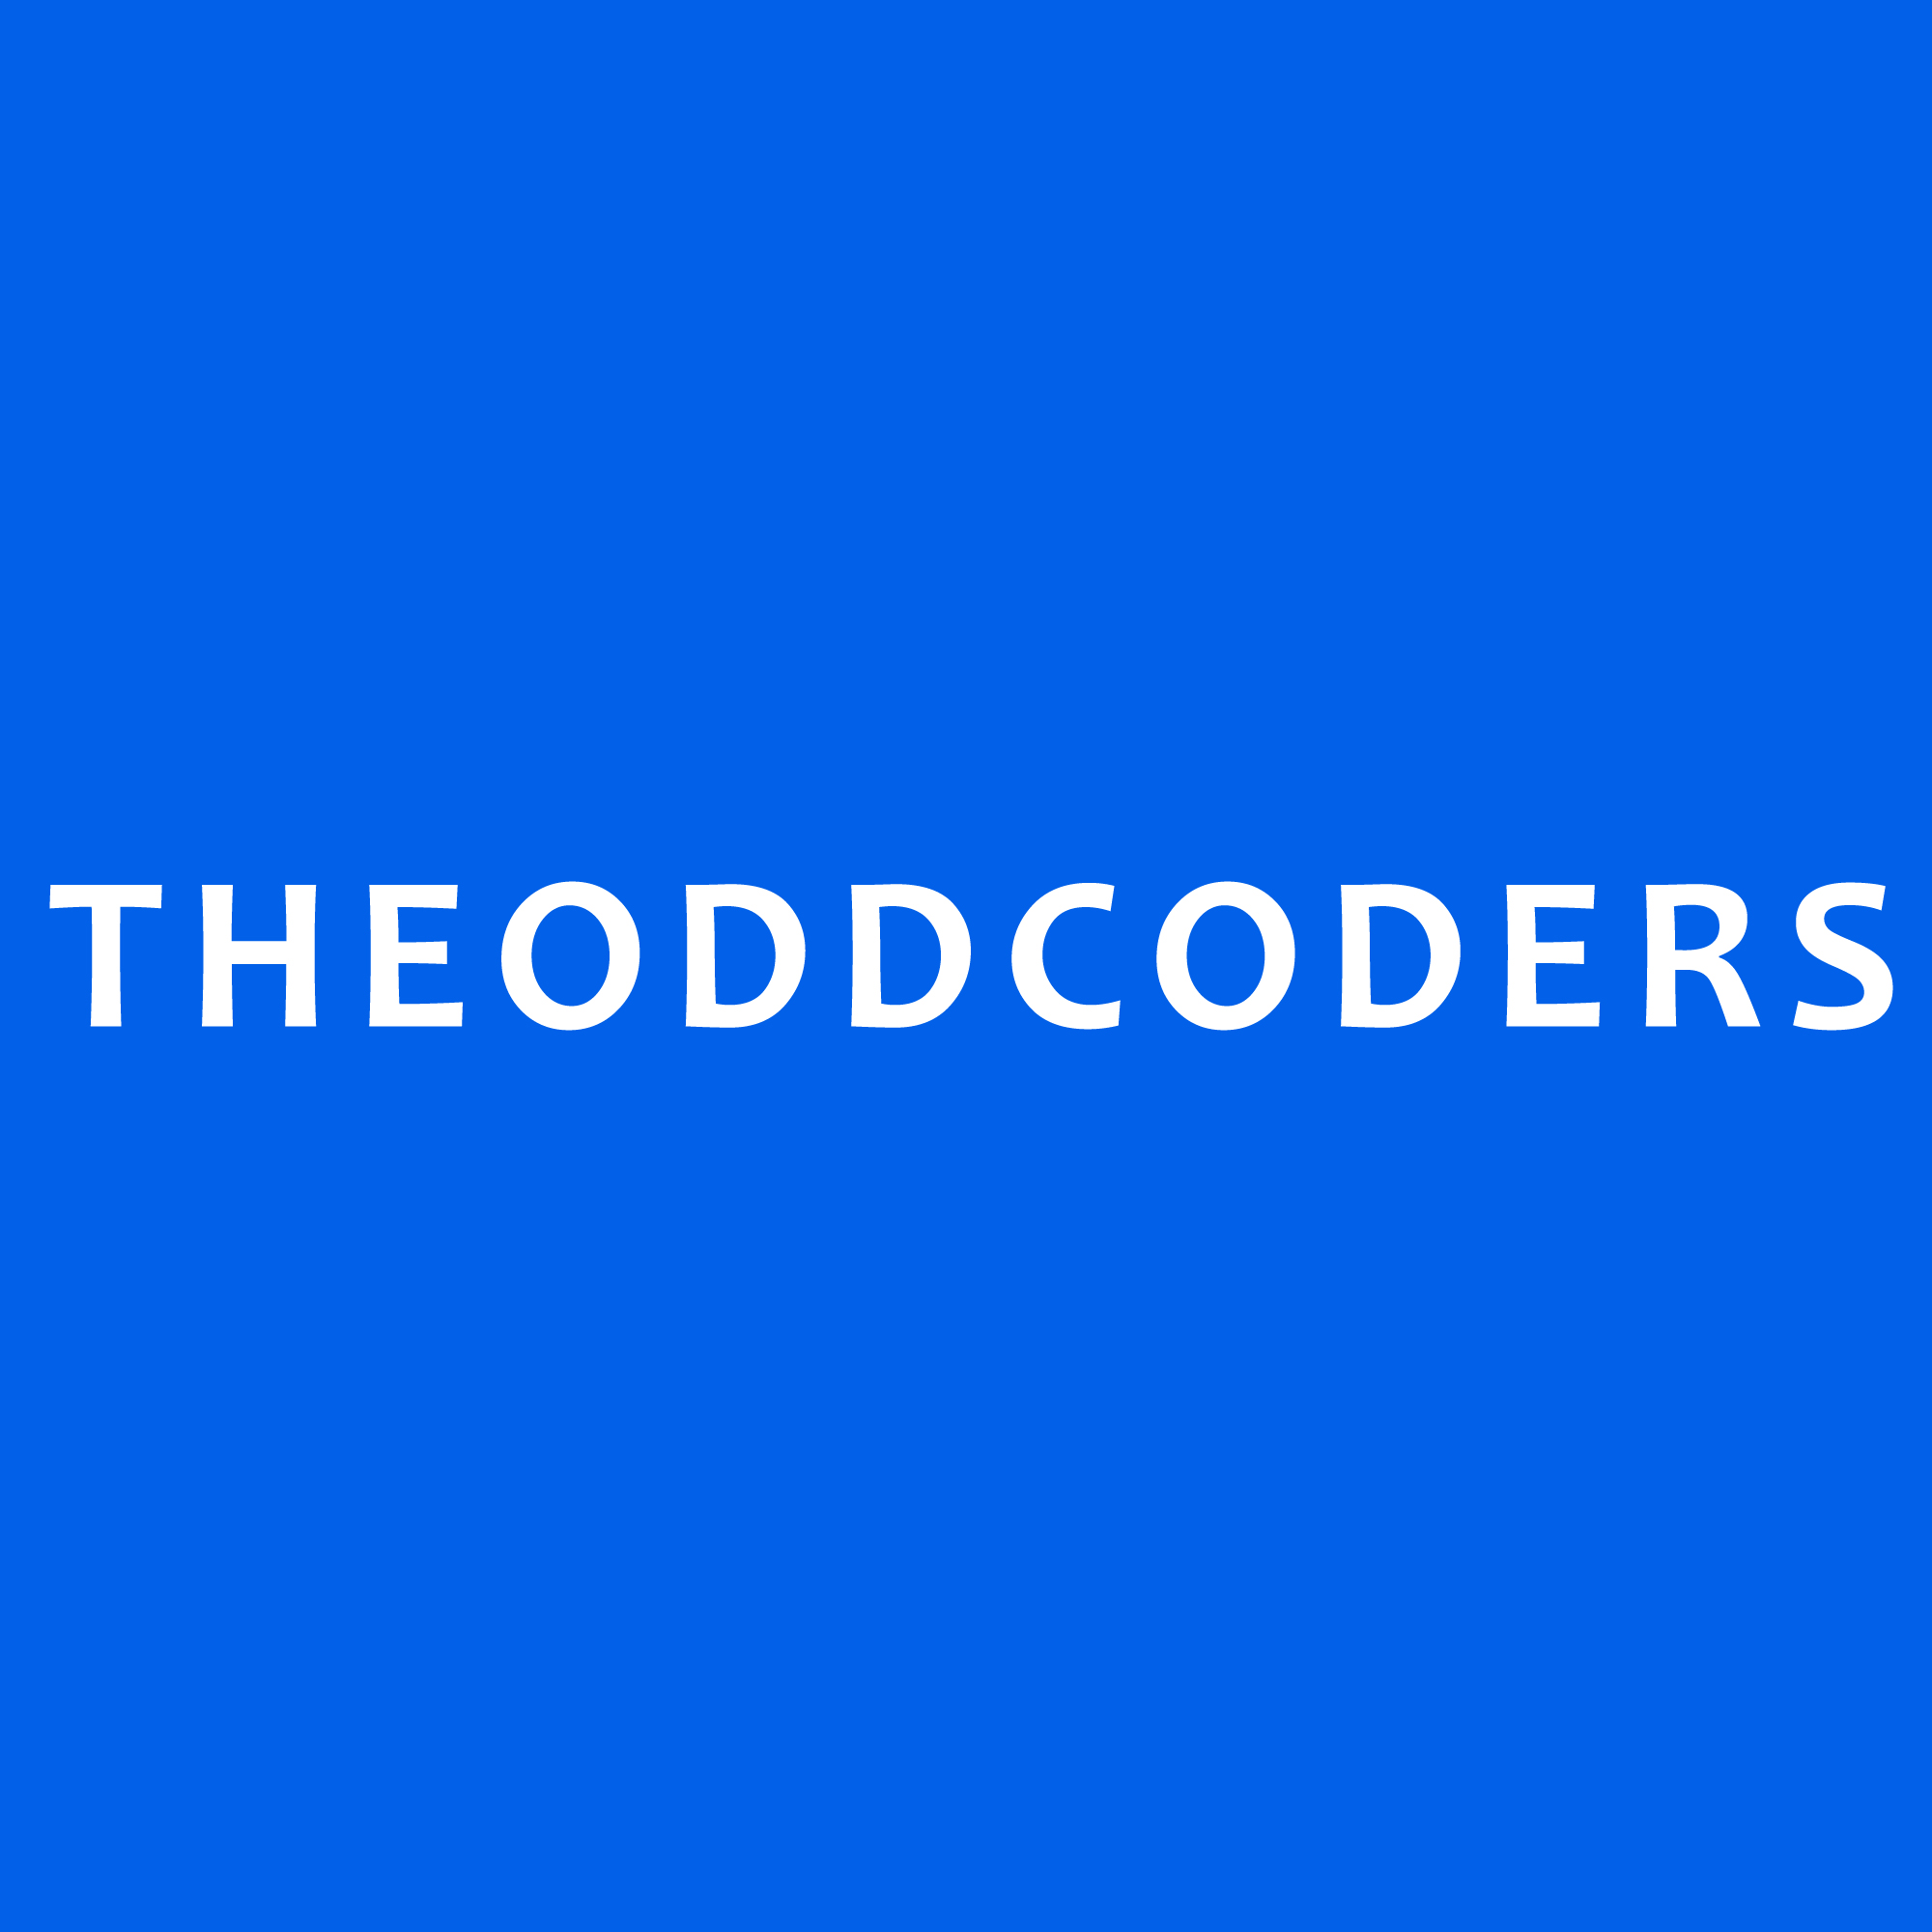 Theoddcoders Technologies